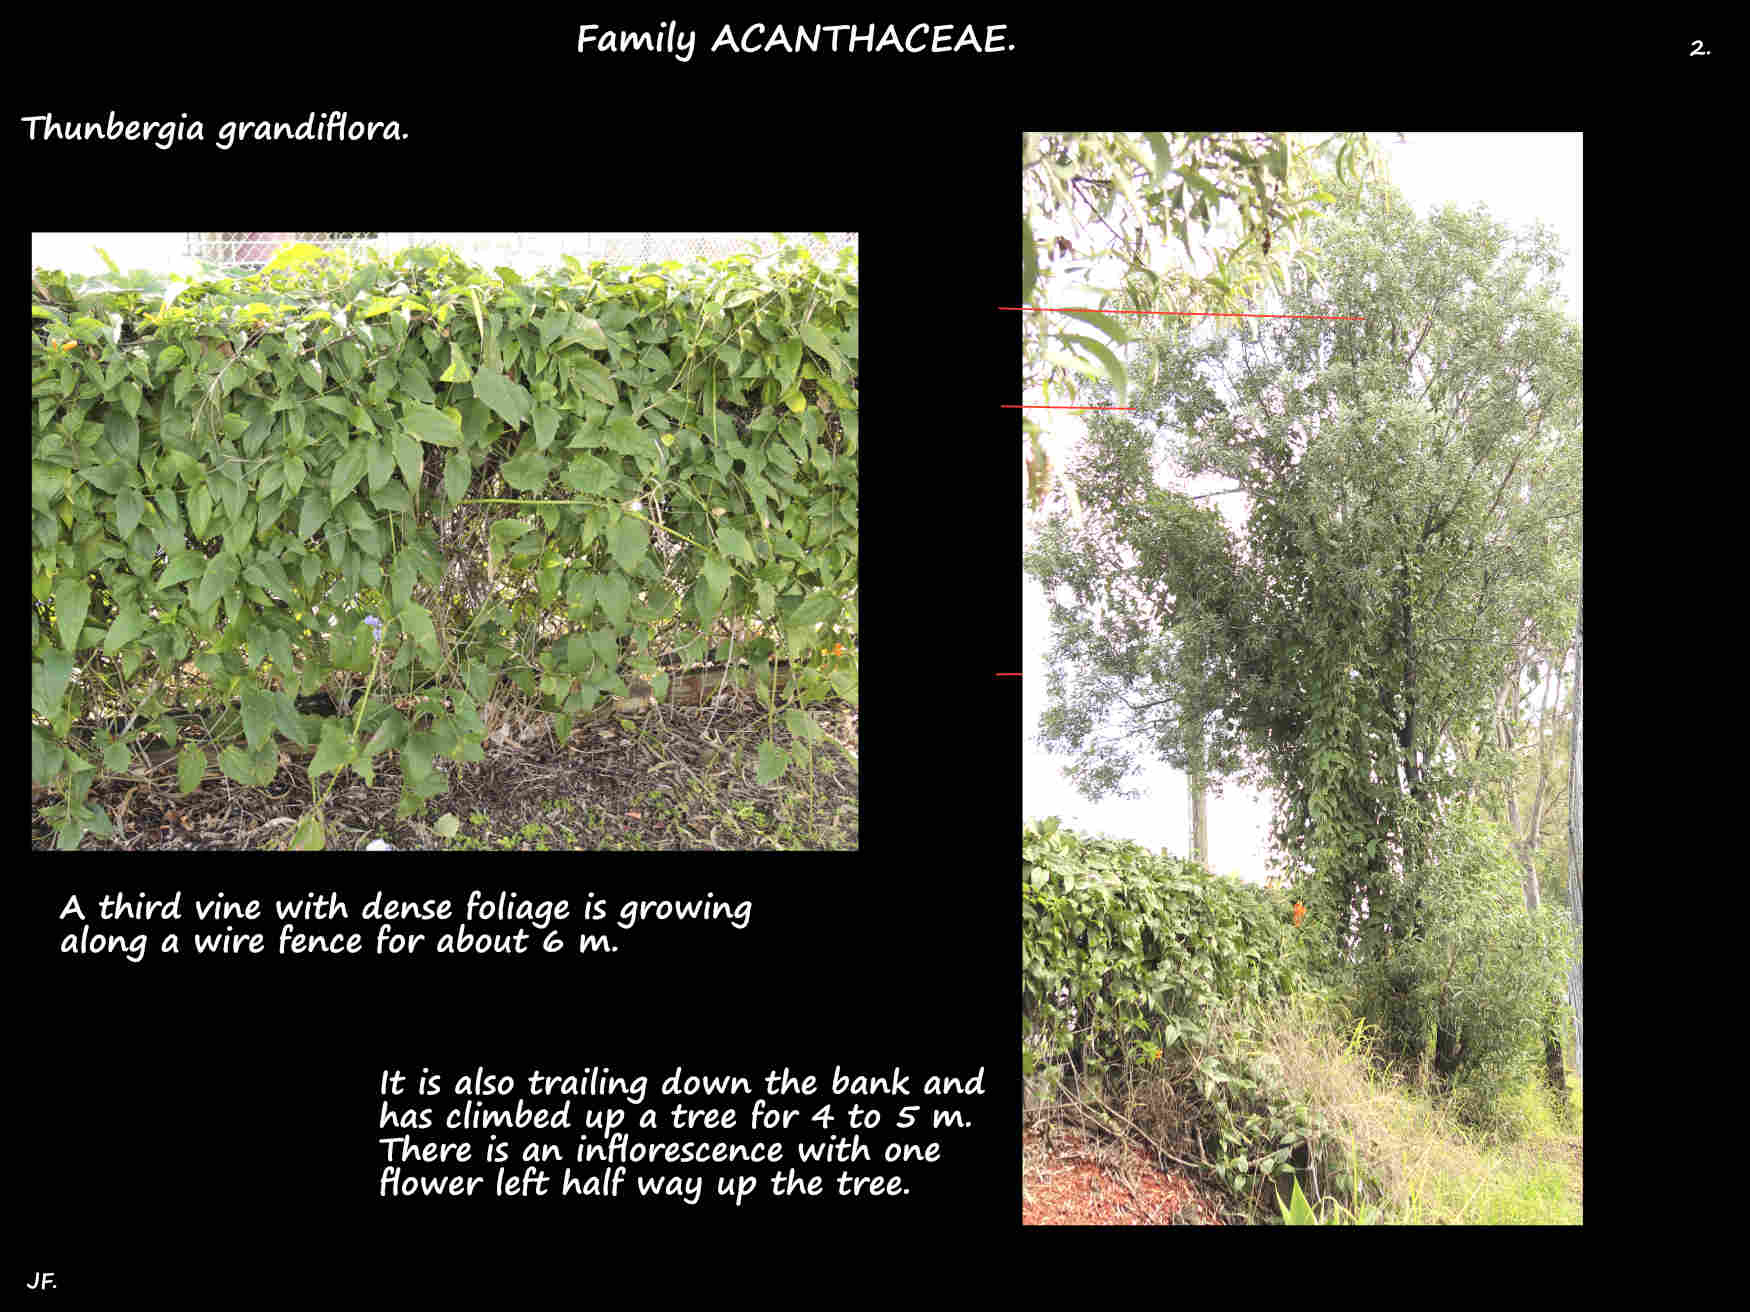 2 A Thunbergia grandiflora vine 6 m up a tree